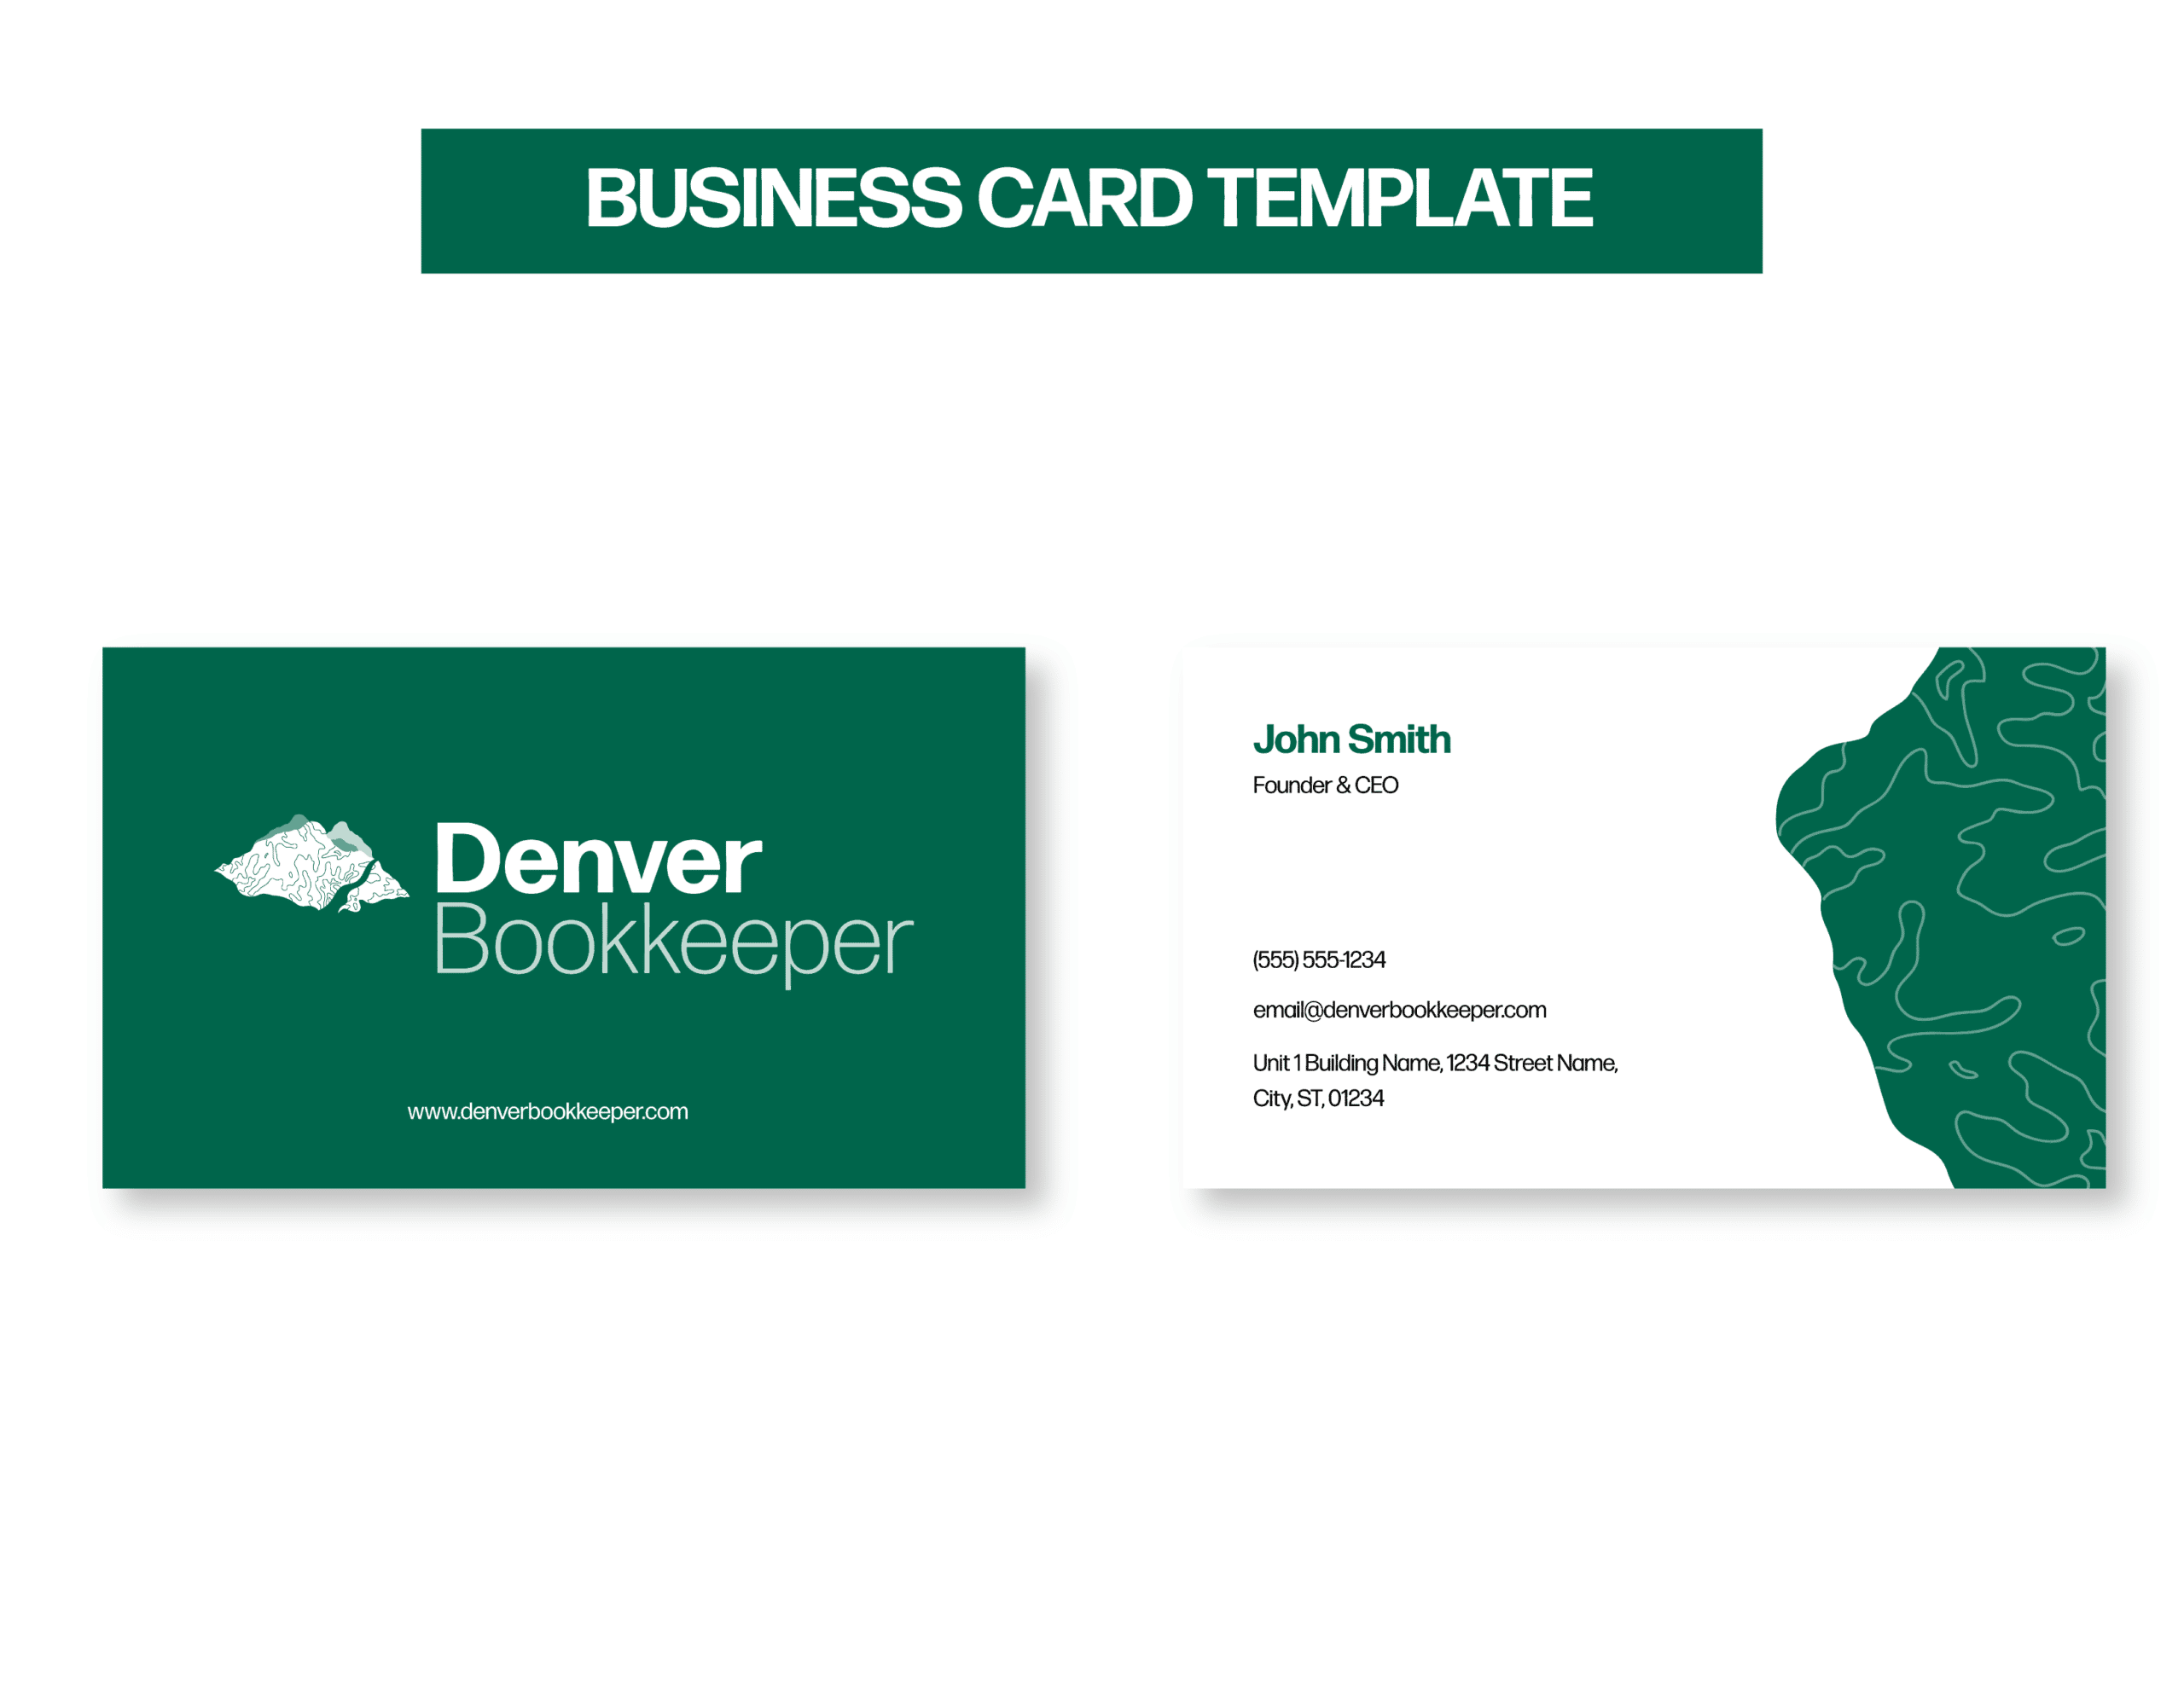 04Denver_Showcase_Business Card Template